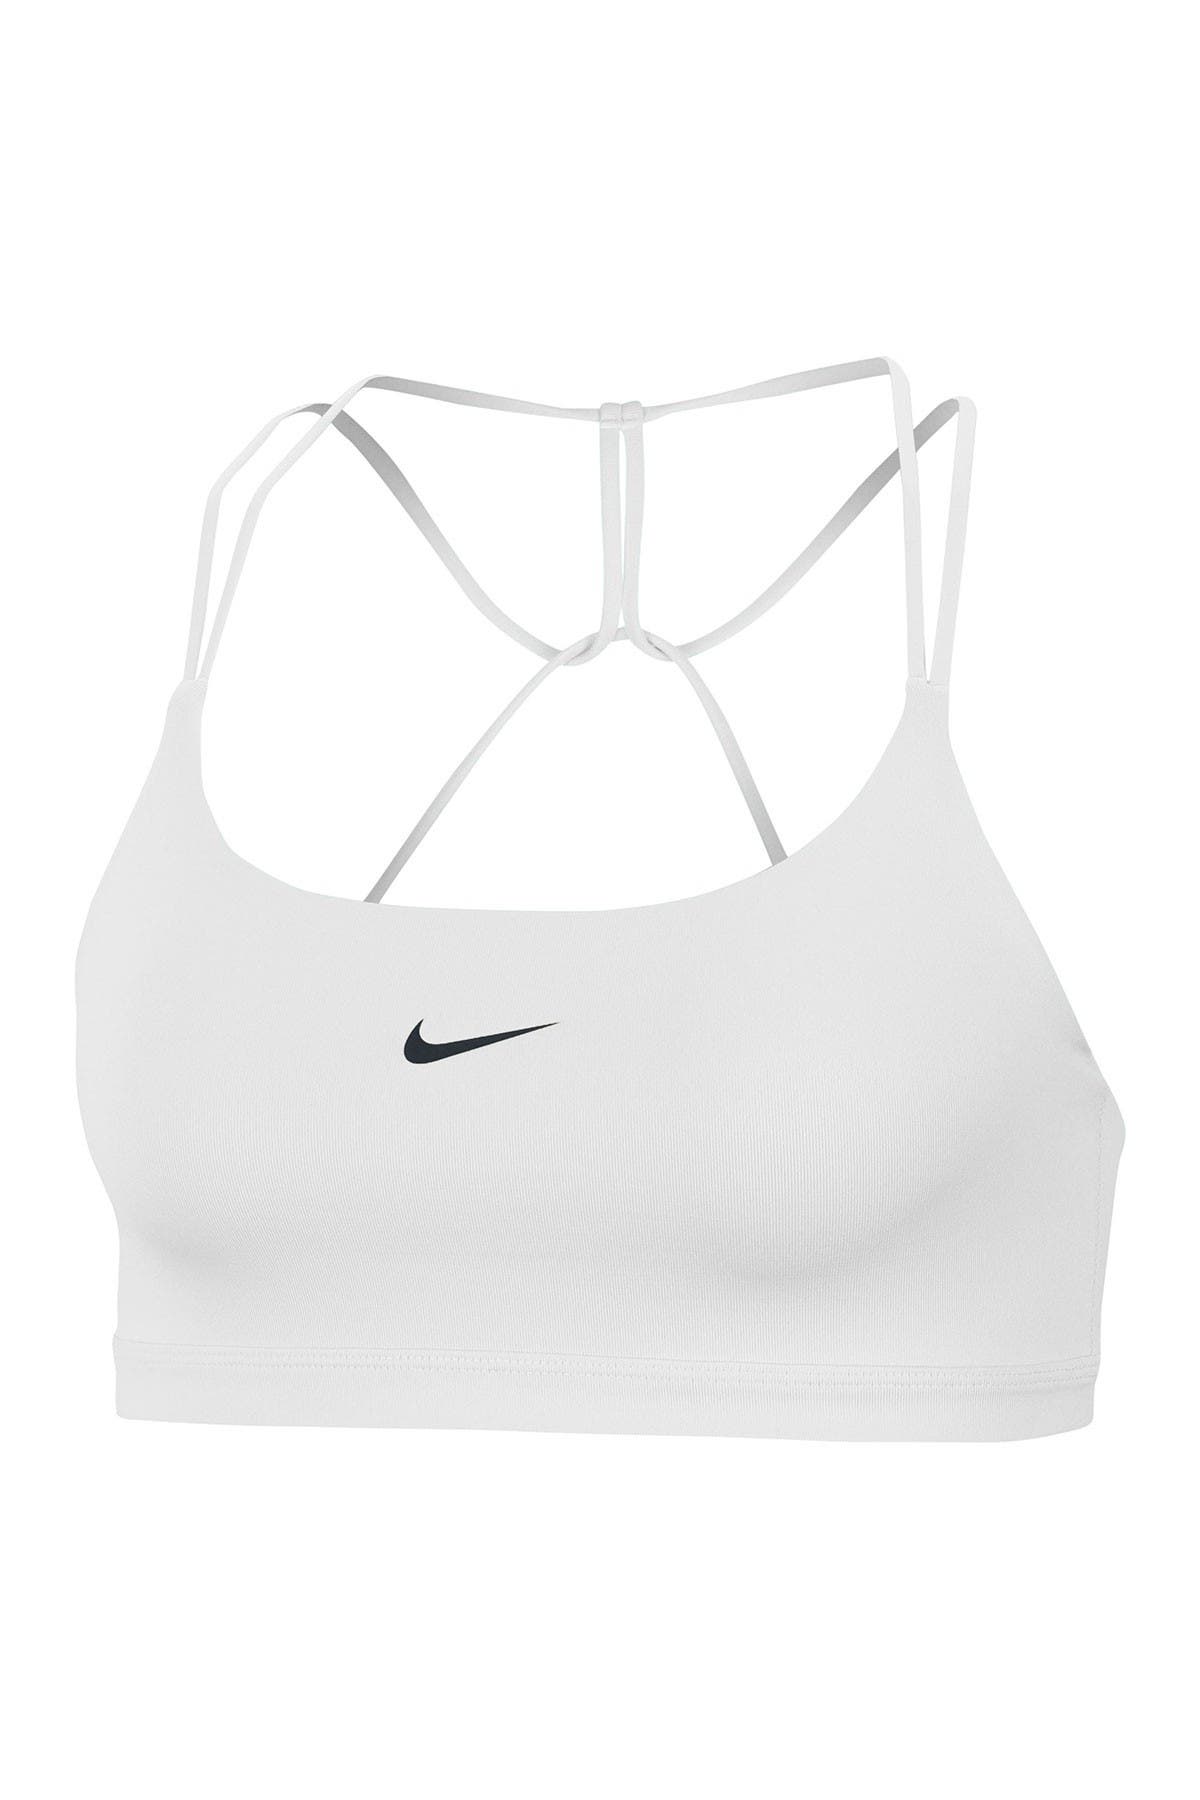 Nike Indy Strappy Sports Bra In White/black